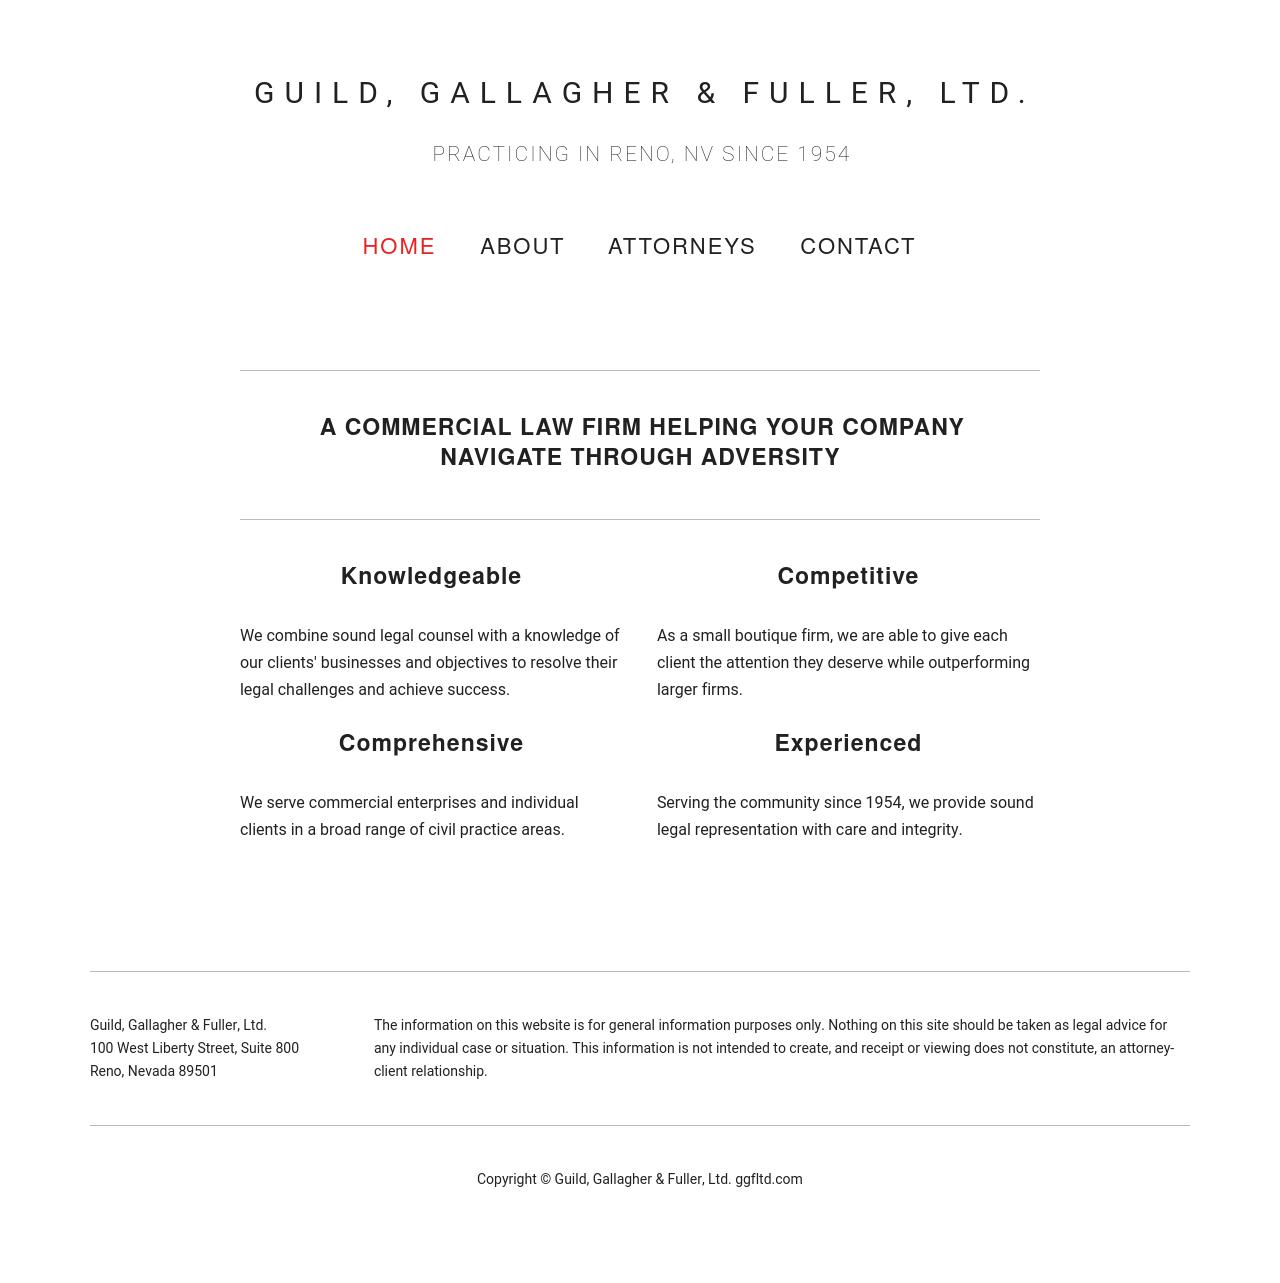 Guild Gallagher & Fuller Ltd. - Reno NV Lawyers